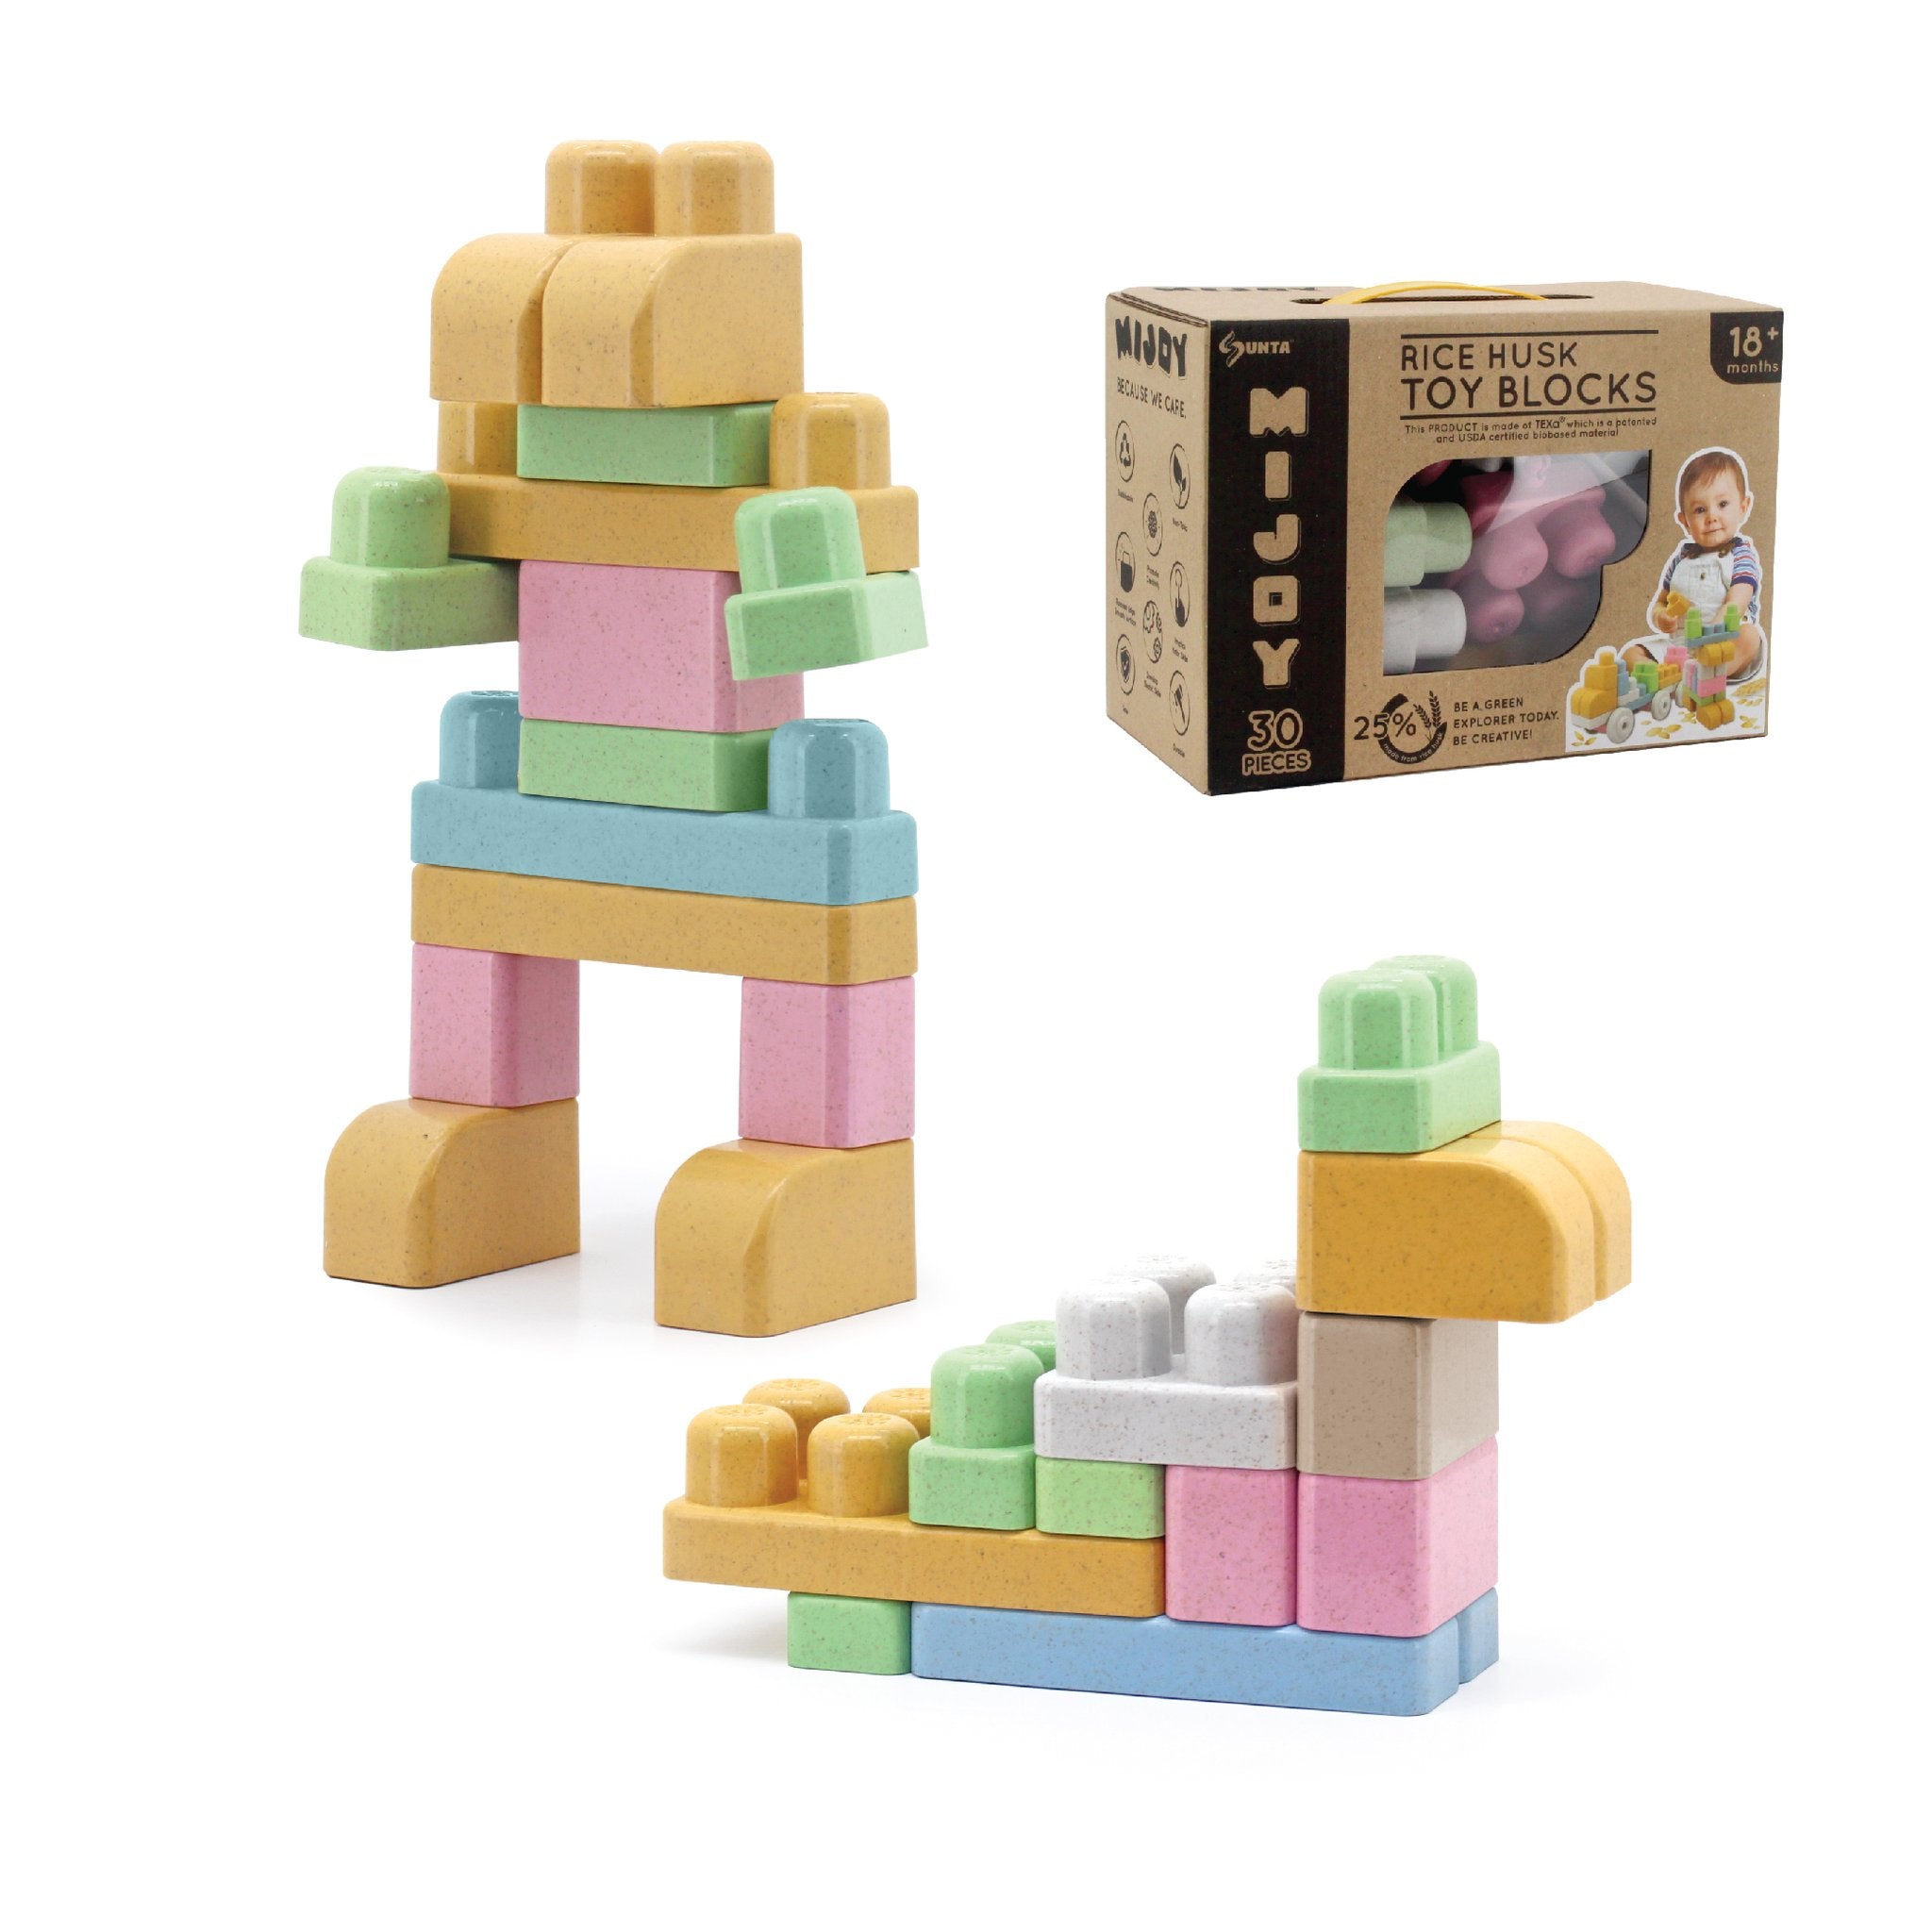 MIJOY Rice Husk Toy Blocks [30 pcs]